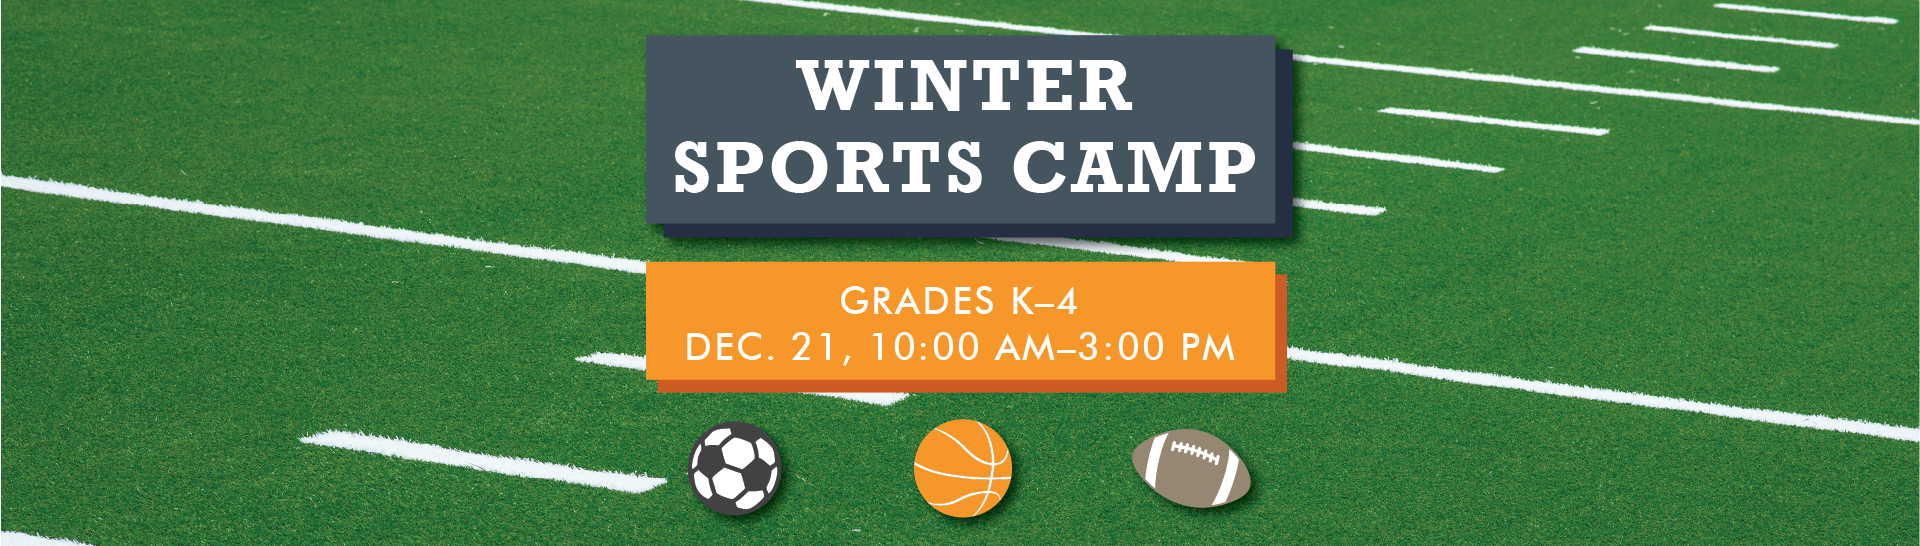 Winter Sports Camp